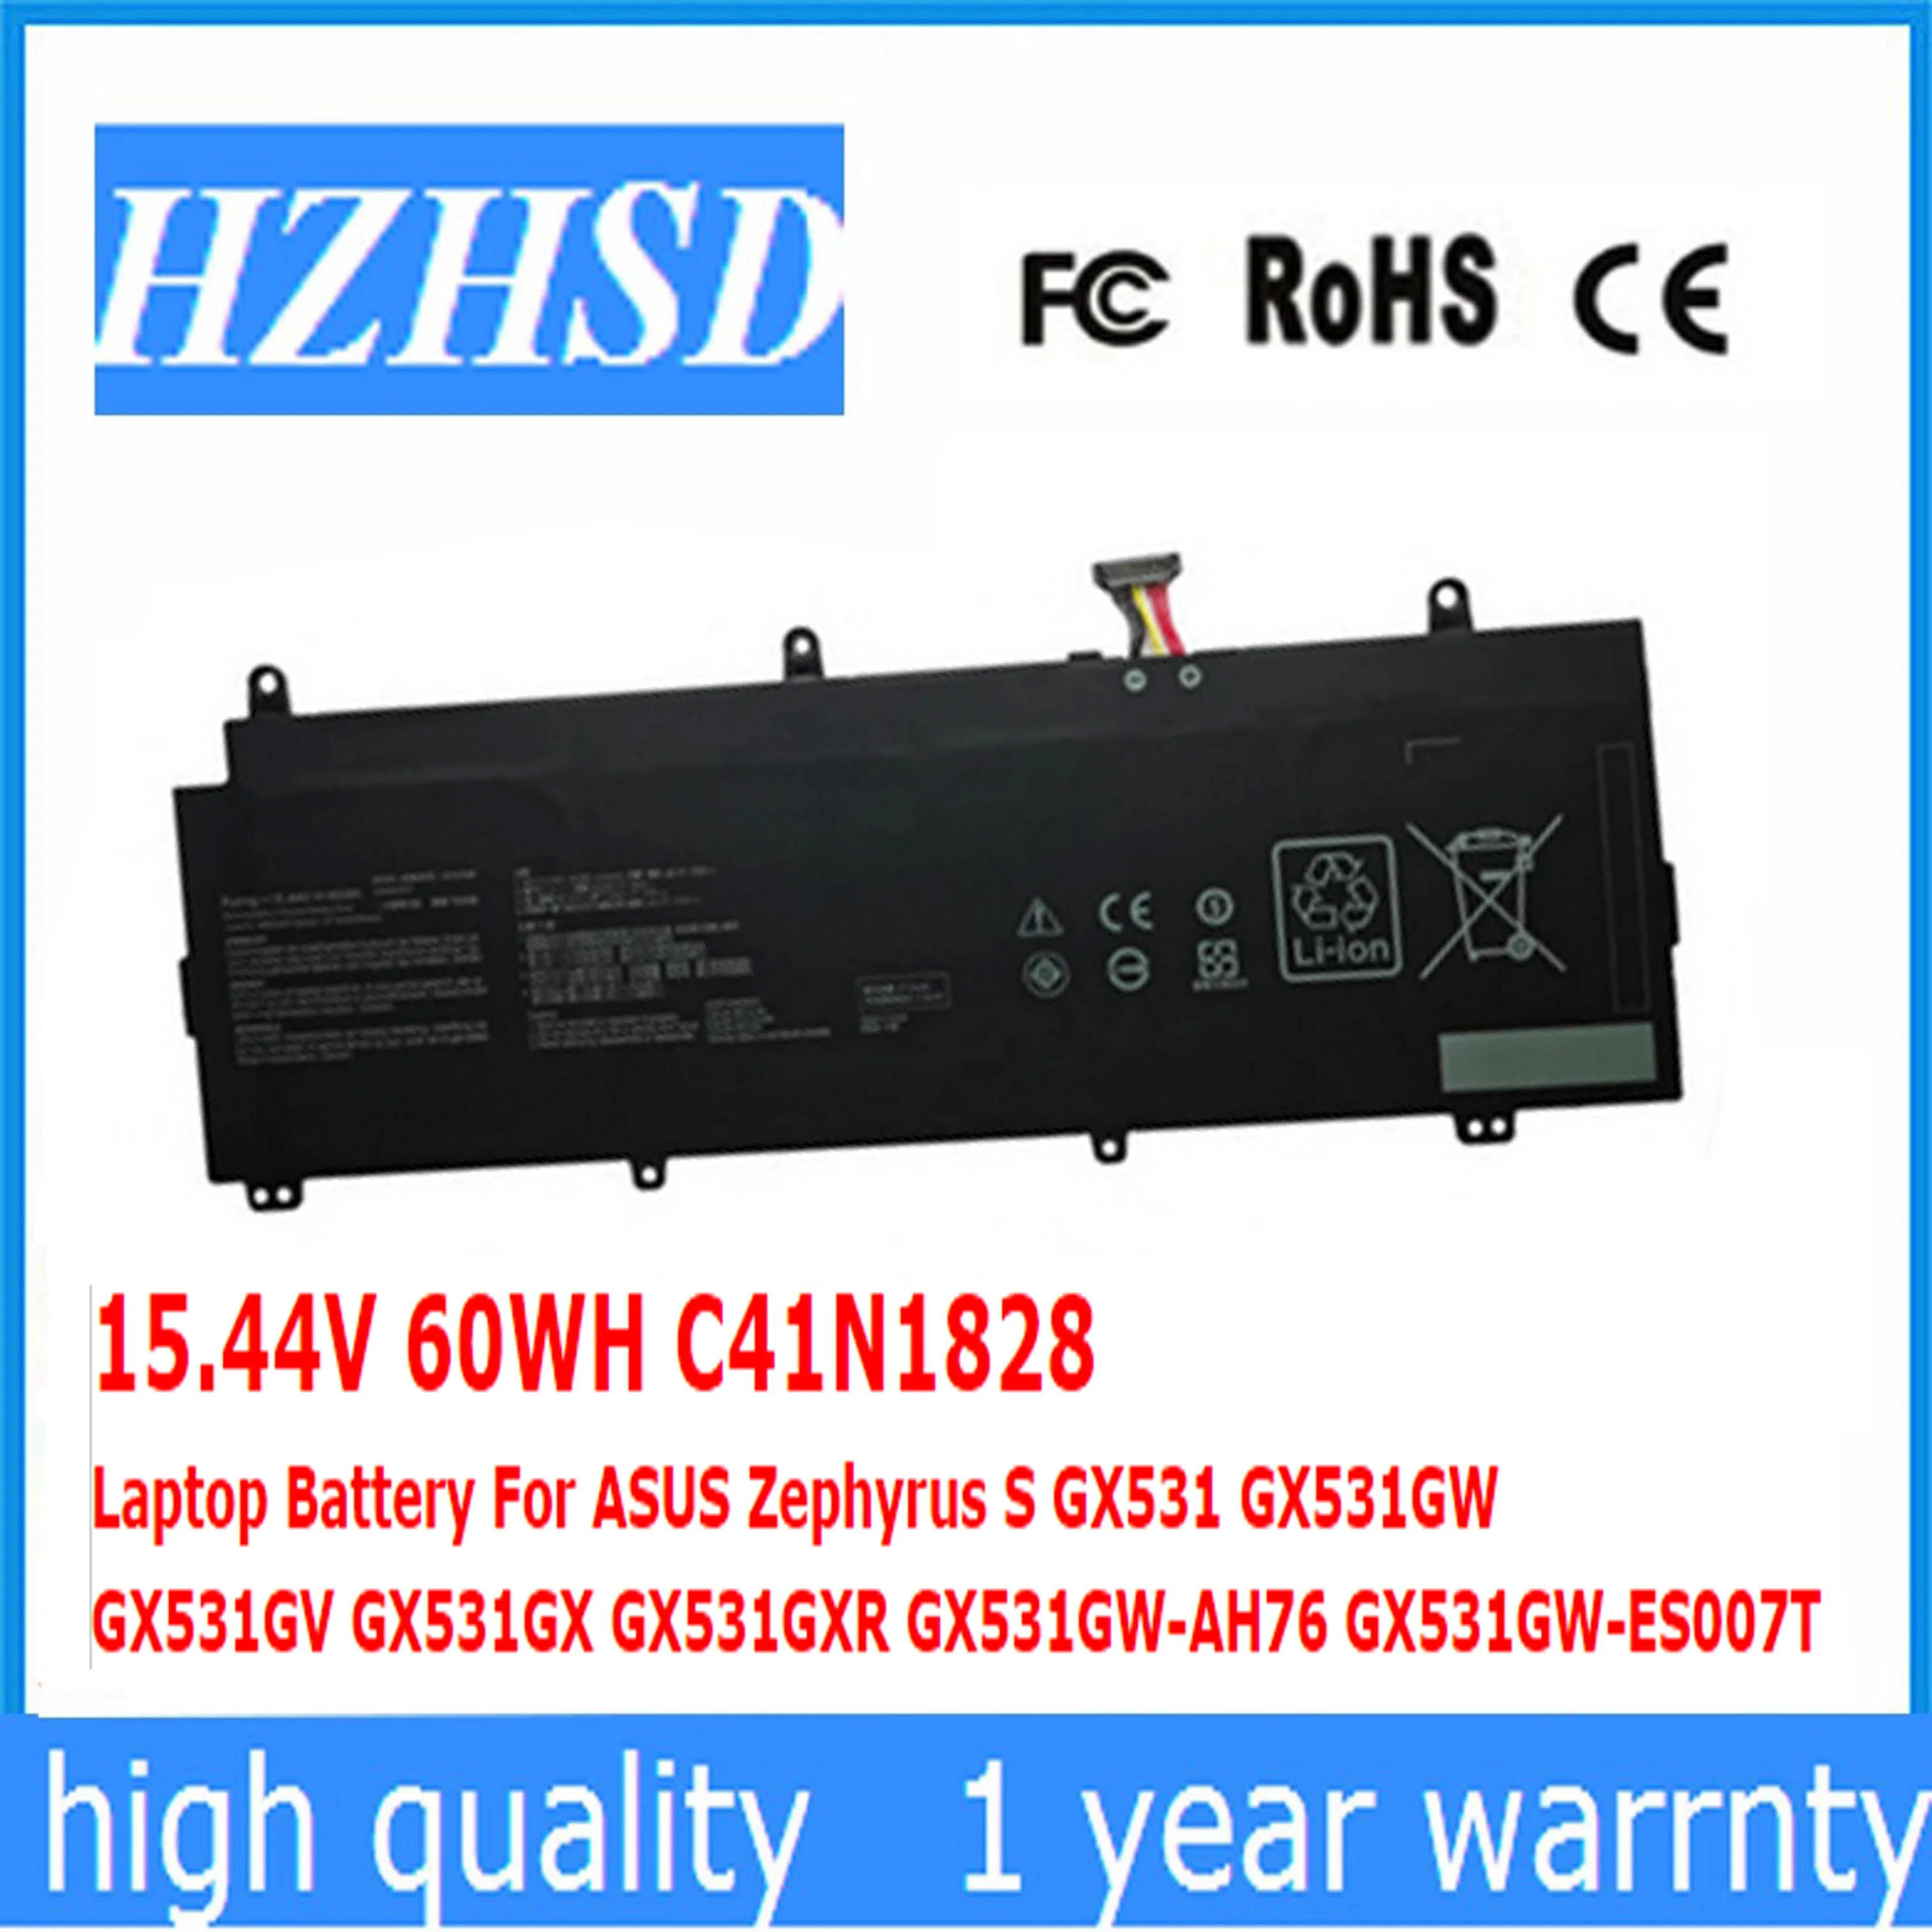 

15.44V 60WH C41N1828 Laptop Battery For ASUS Zephyrus S GX531 GX531GW GX531GV GX531GX GX531GXR GX531GW-AH76 GX531GW-ES007T